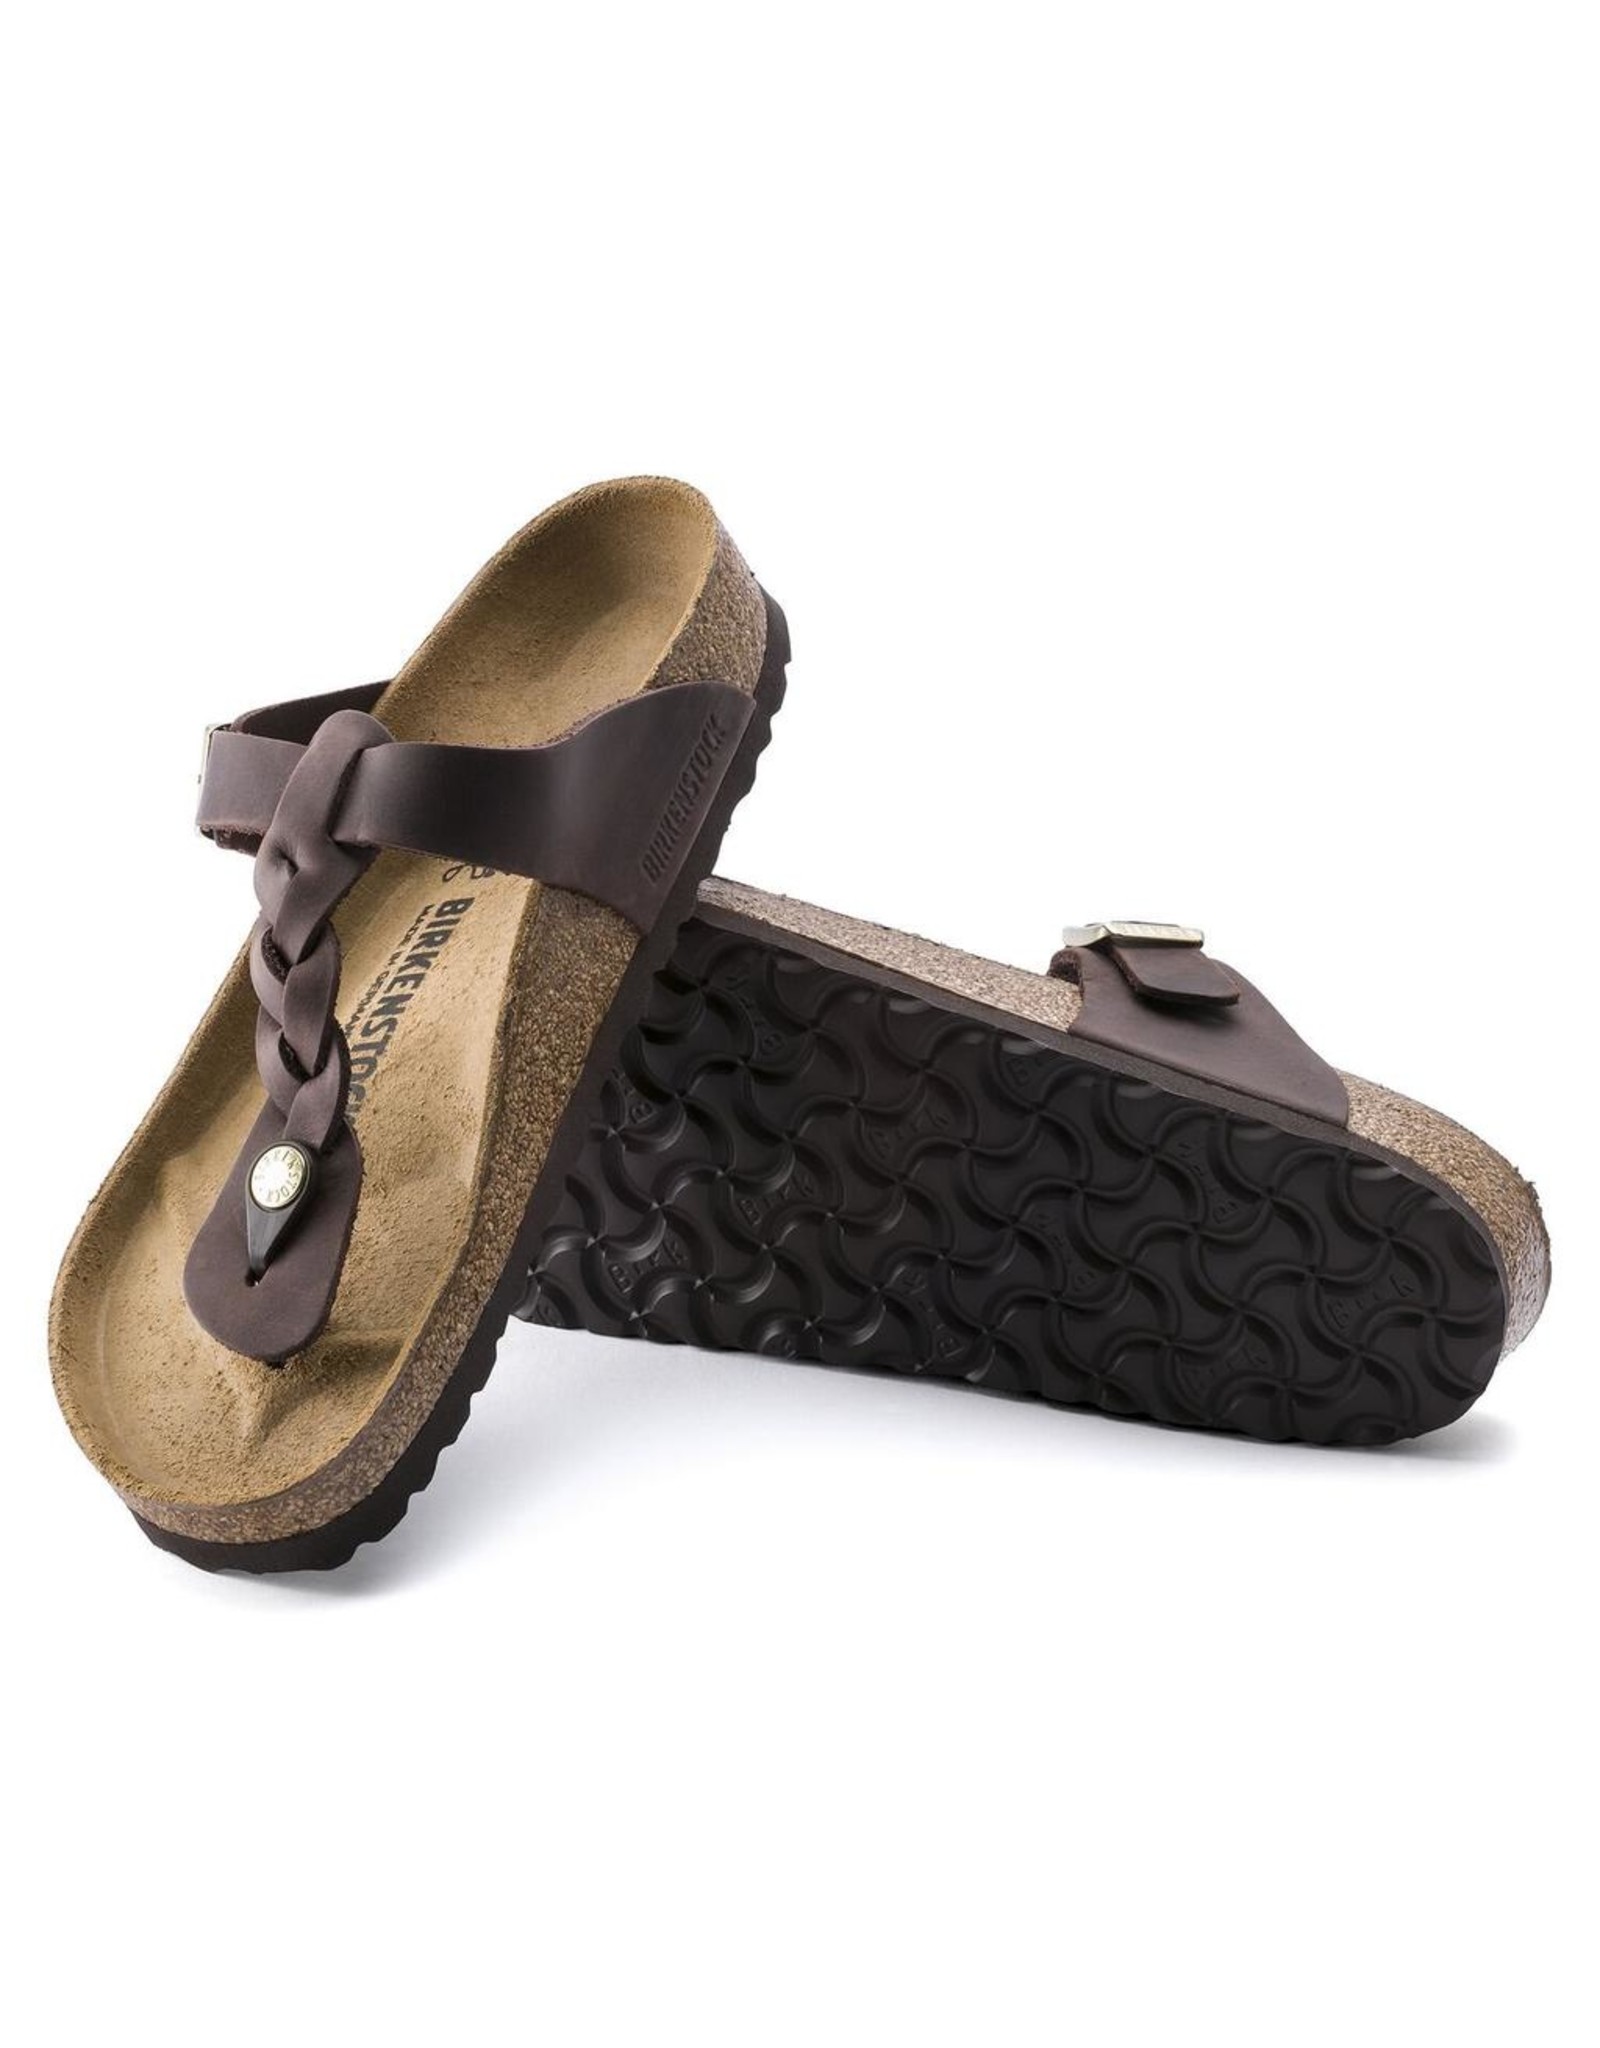 Birkenstock Habana Leather Gizeh Braid Sandal